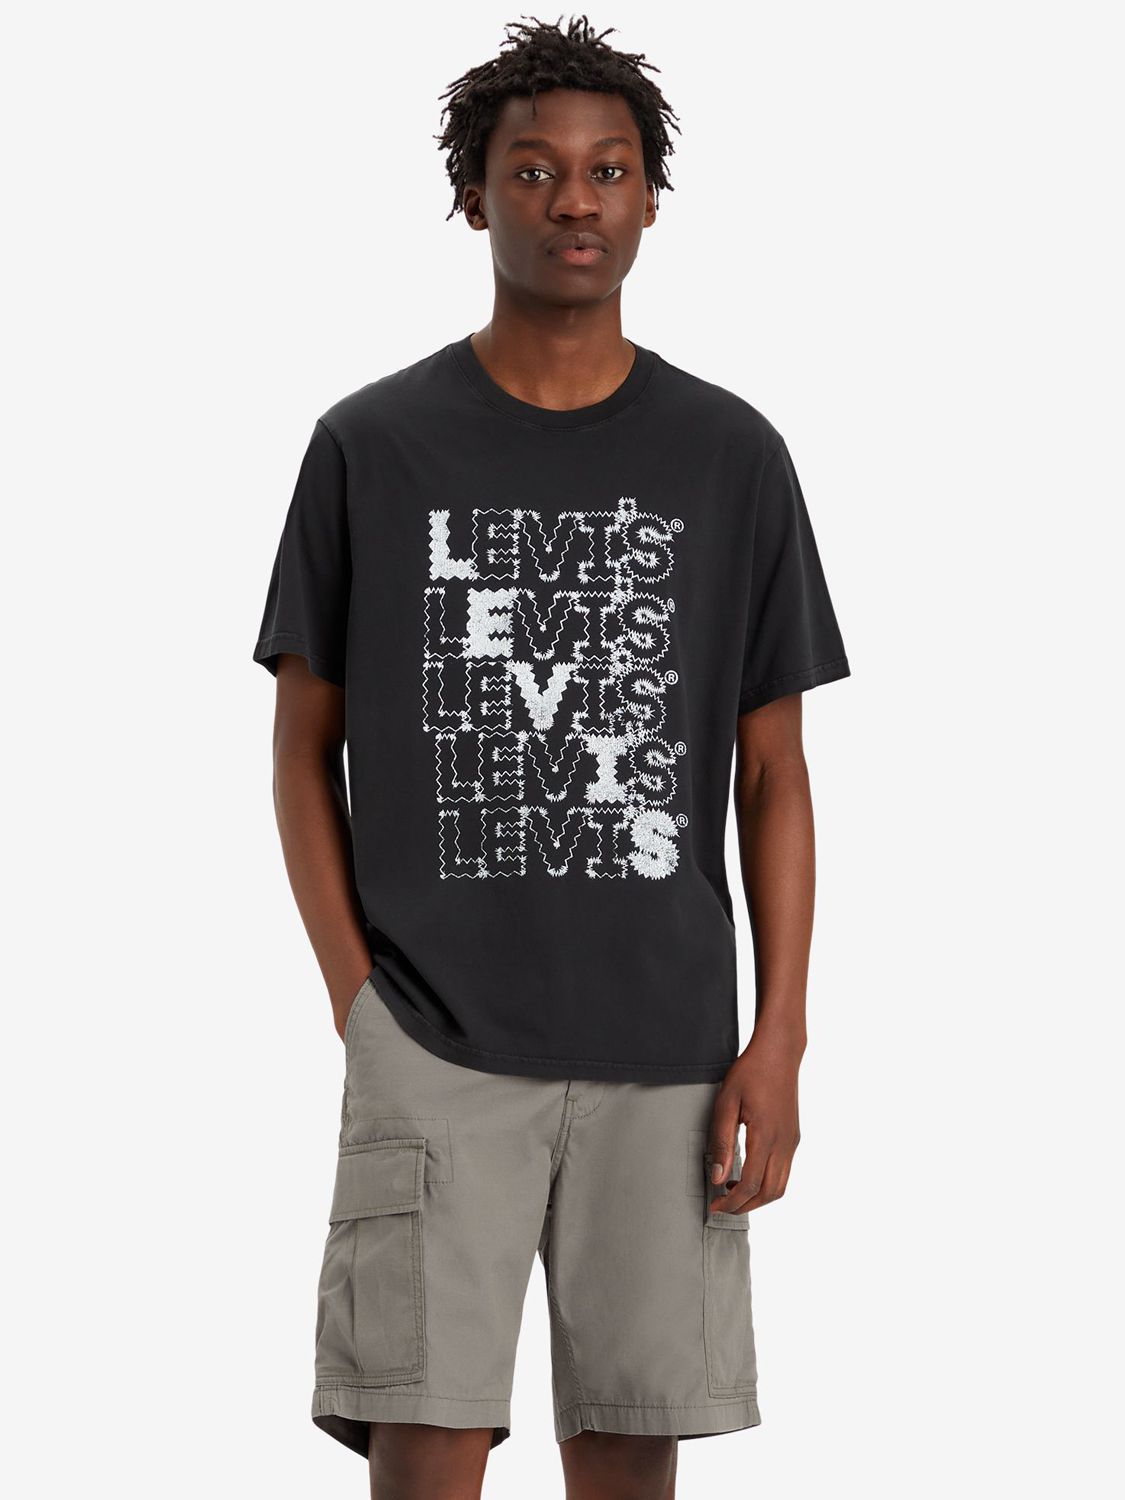 Men's T-shirt Levi's Regular Short sleeve